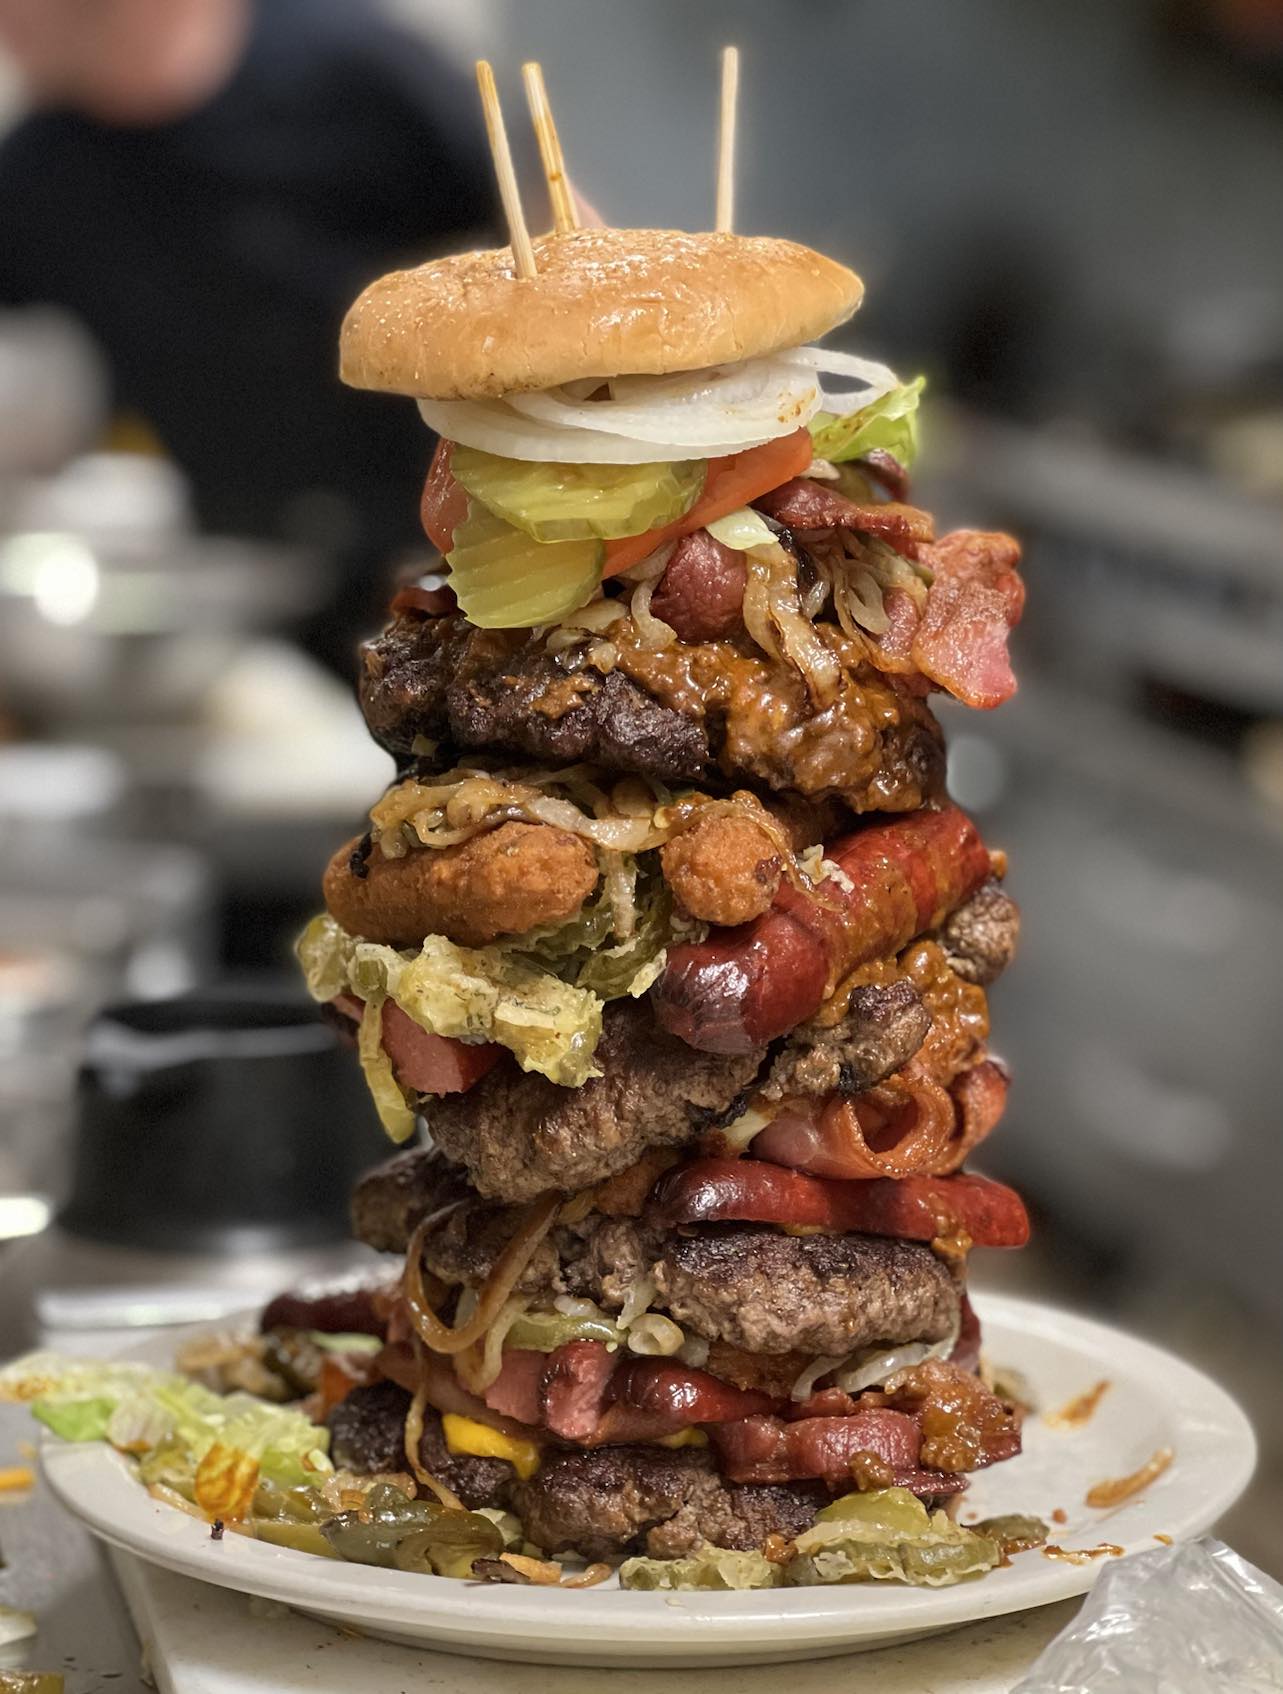 The Challenge Burger